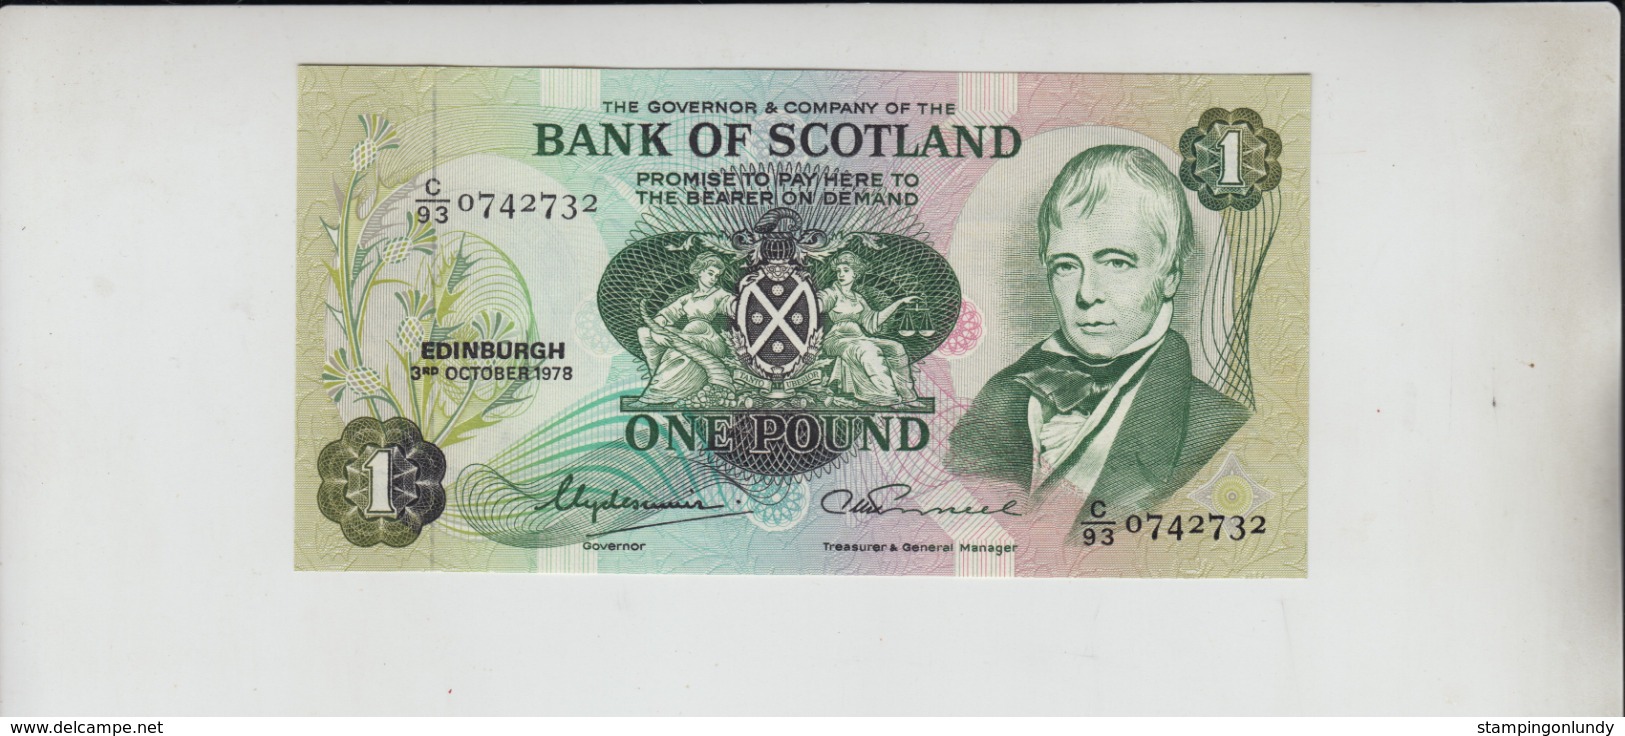 AB34 3 Oct 1978 Edinburgh Bank Of Scotland £1 Note #C/93 0742732 FREE UK P+P BUY 1 GET 1 (CHEAPEST) 1/2 PRICE BANKNOTES - 1 Pound